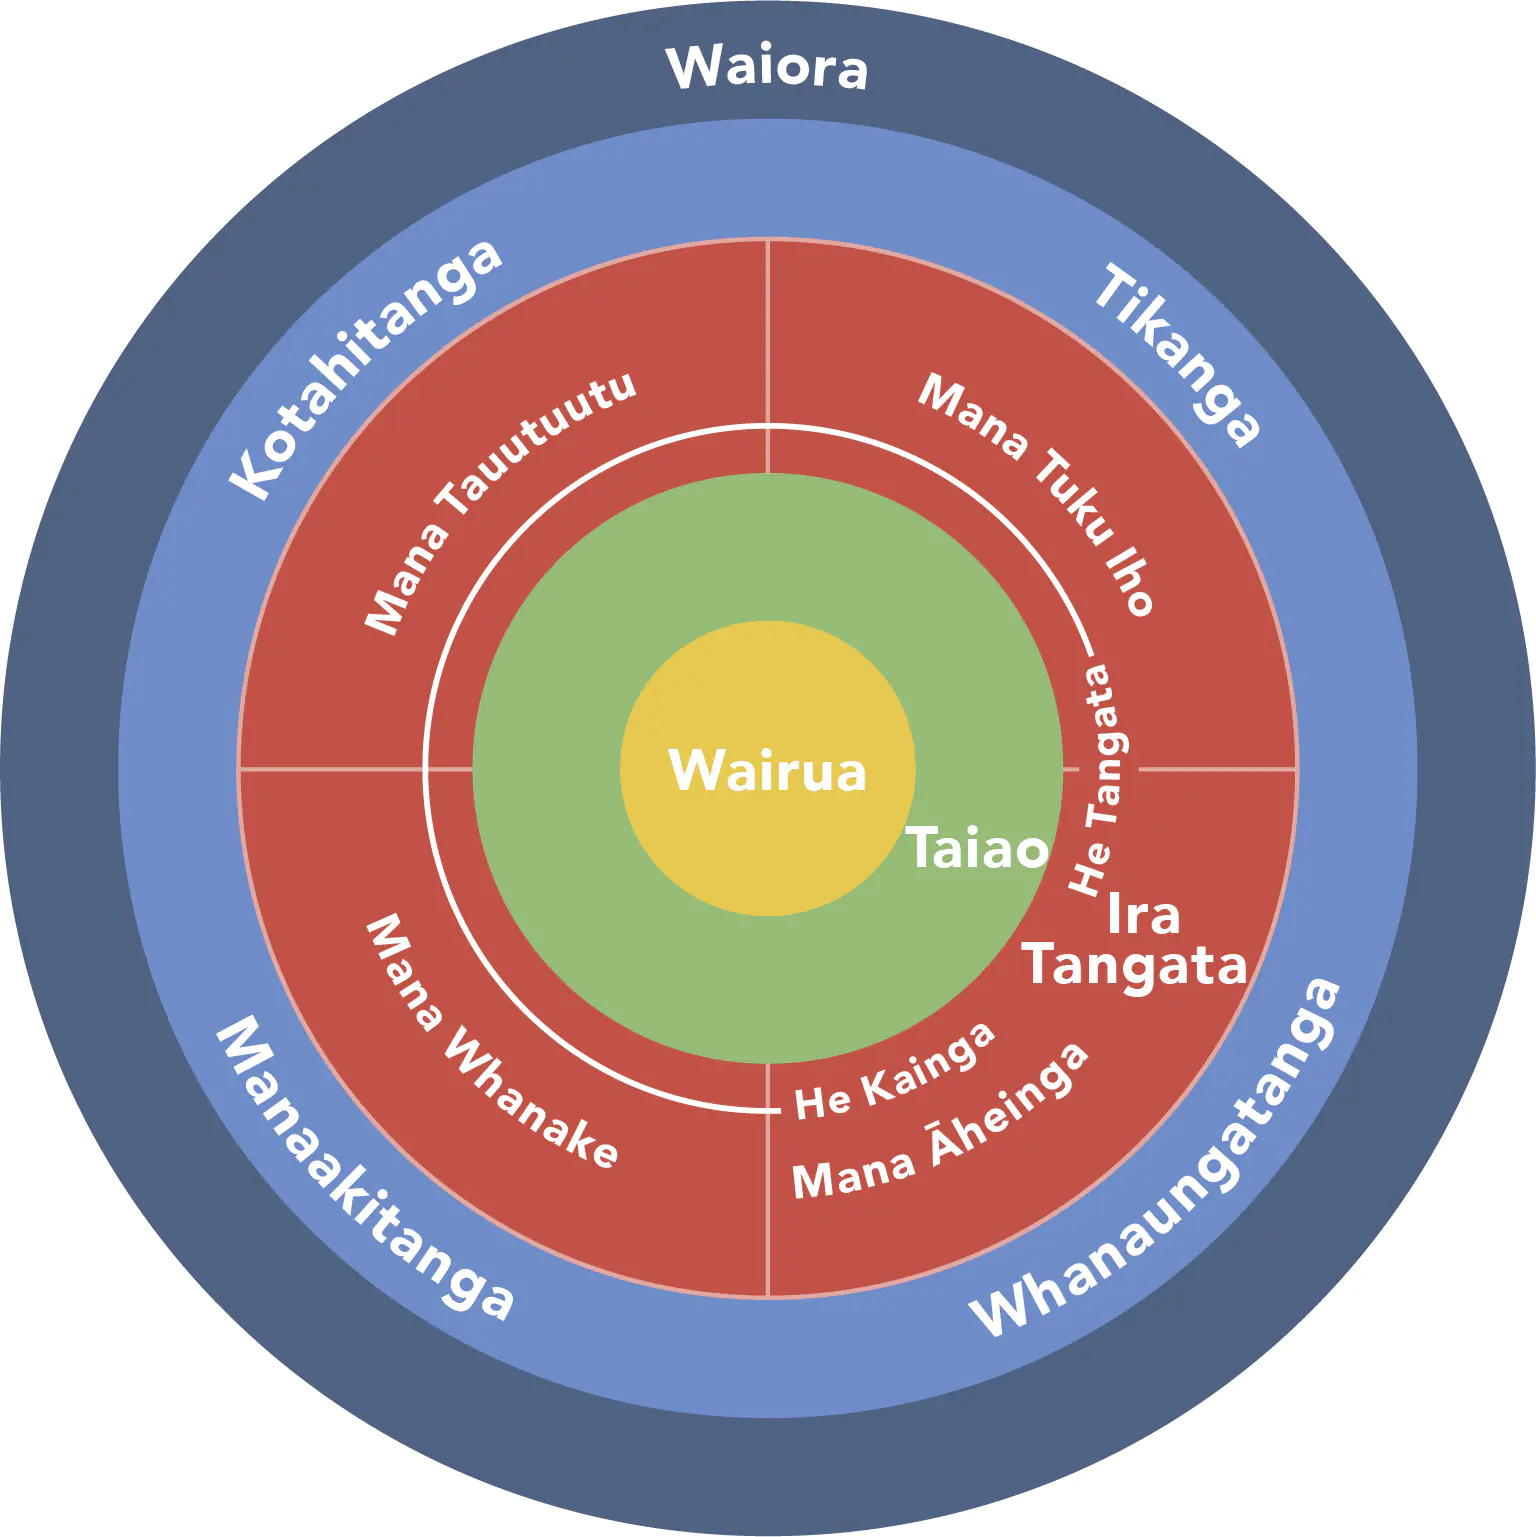 He Ara Waiora framework built on te ao maori knowledge and perspectives of wellbeing